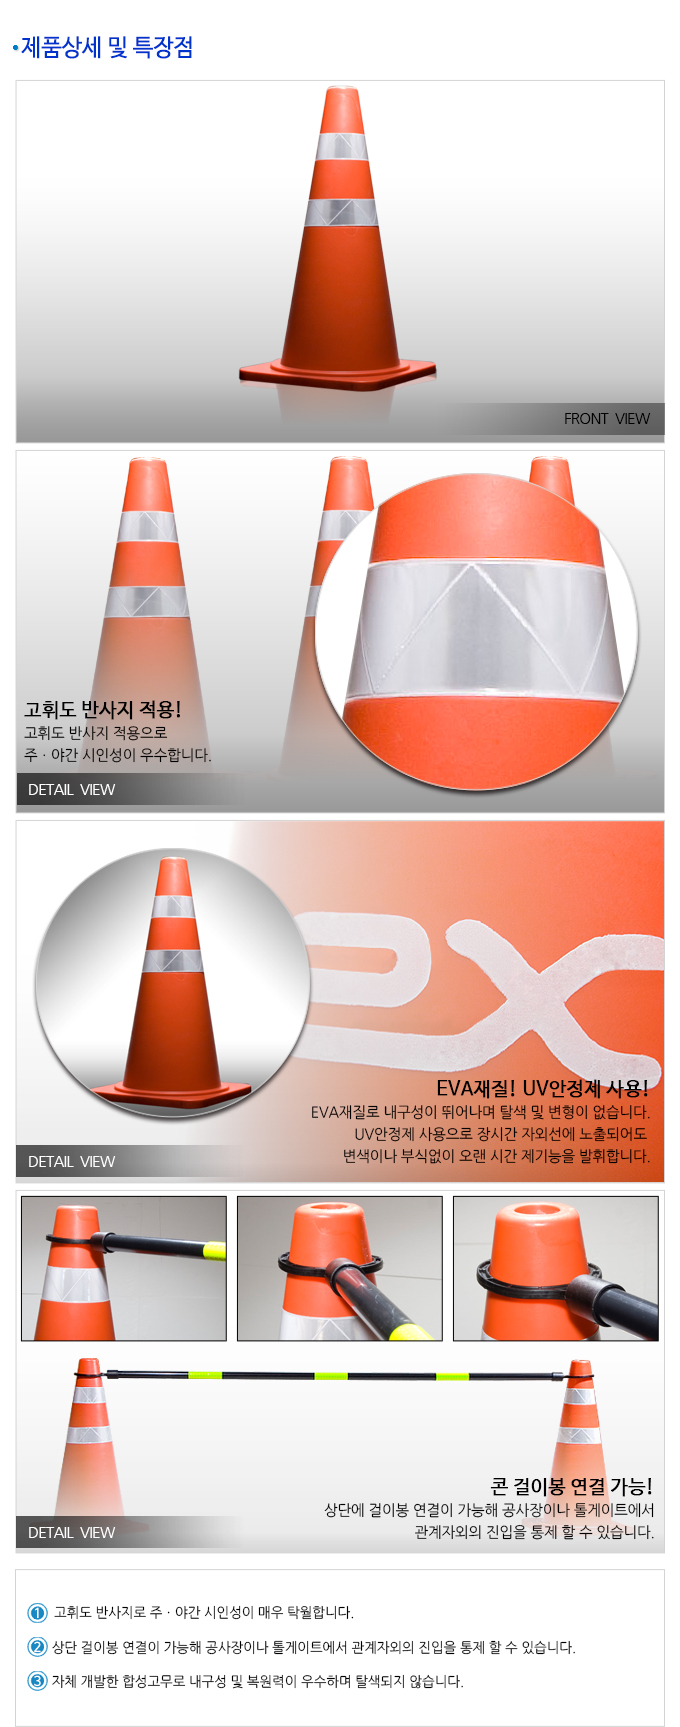 rubber_cone_highway_07.jpg